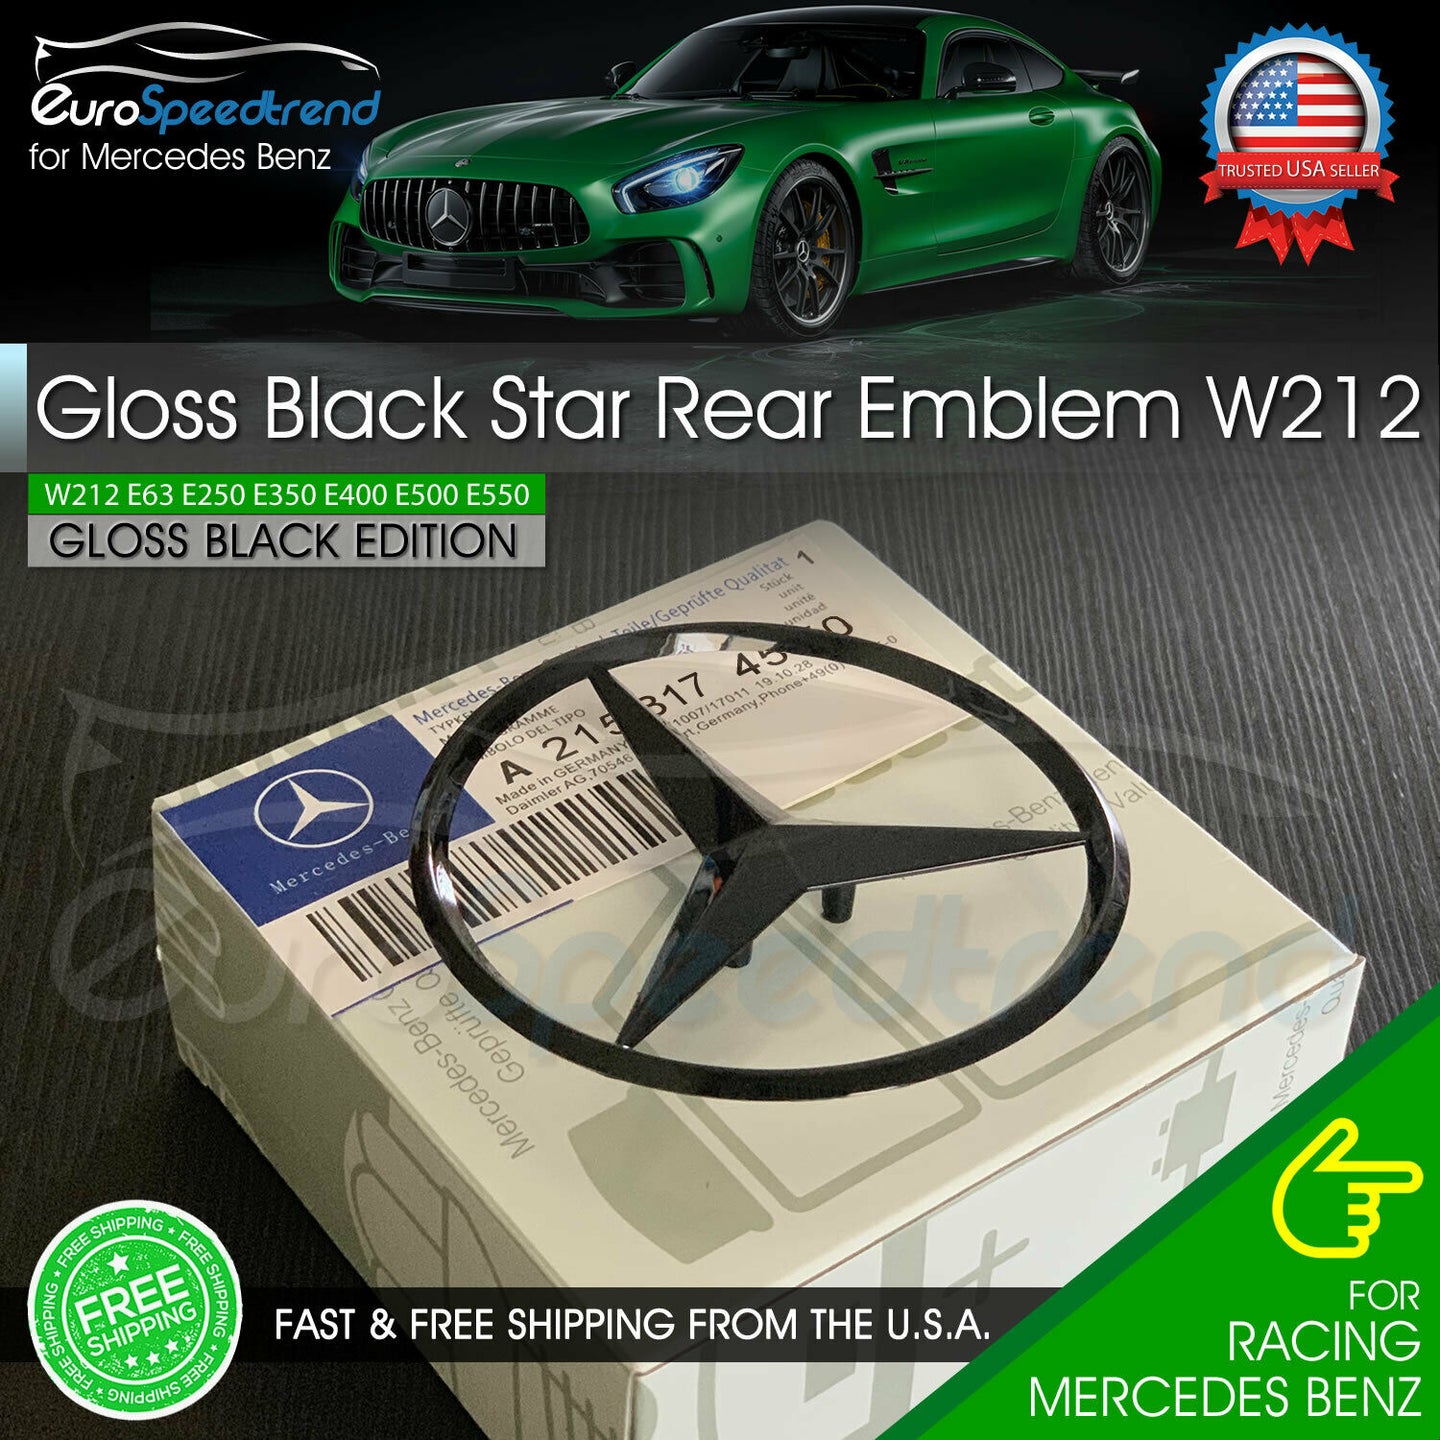 AMG Gloss Black Star Trunk Emblem Rear Lid Badge W212 E63 E350 E400 Mercedes